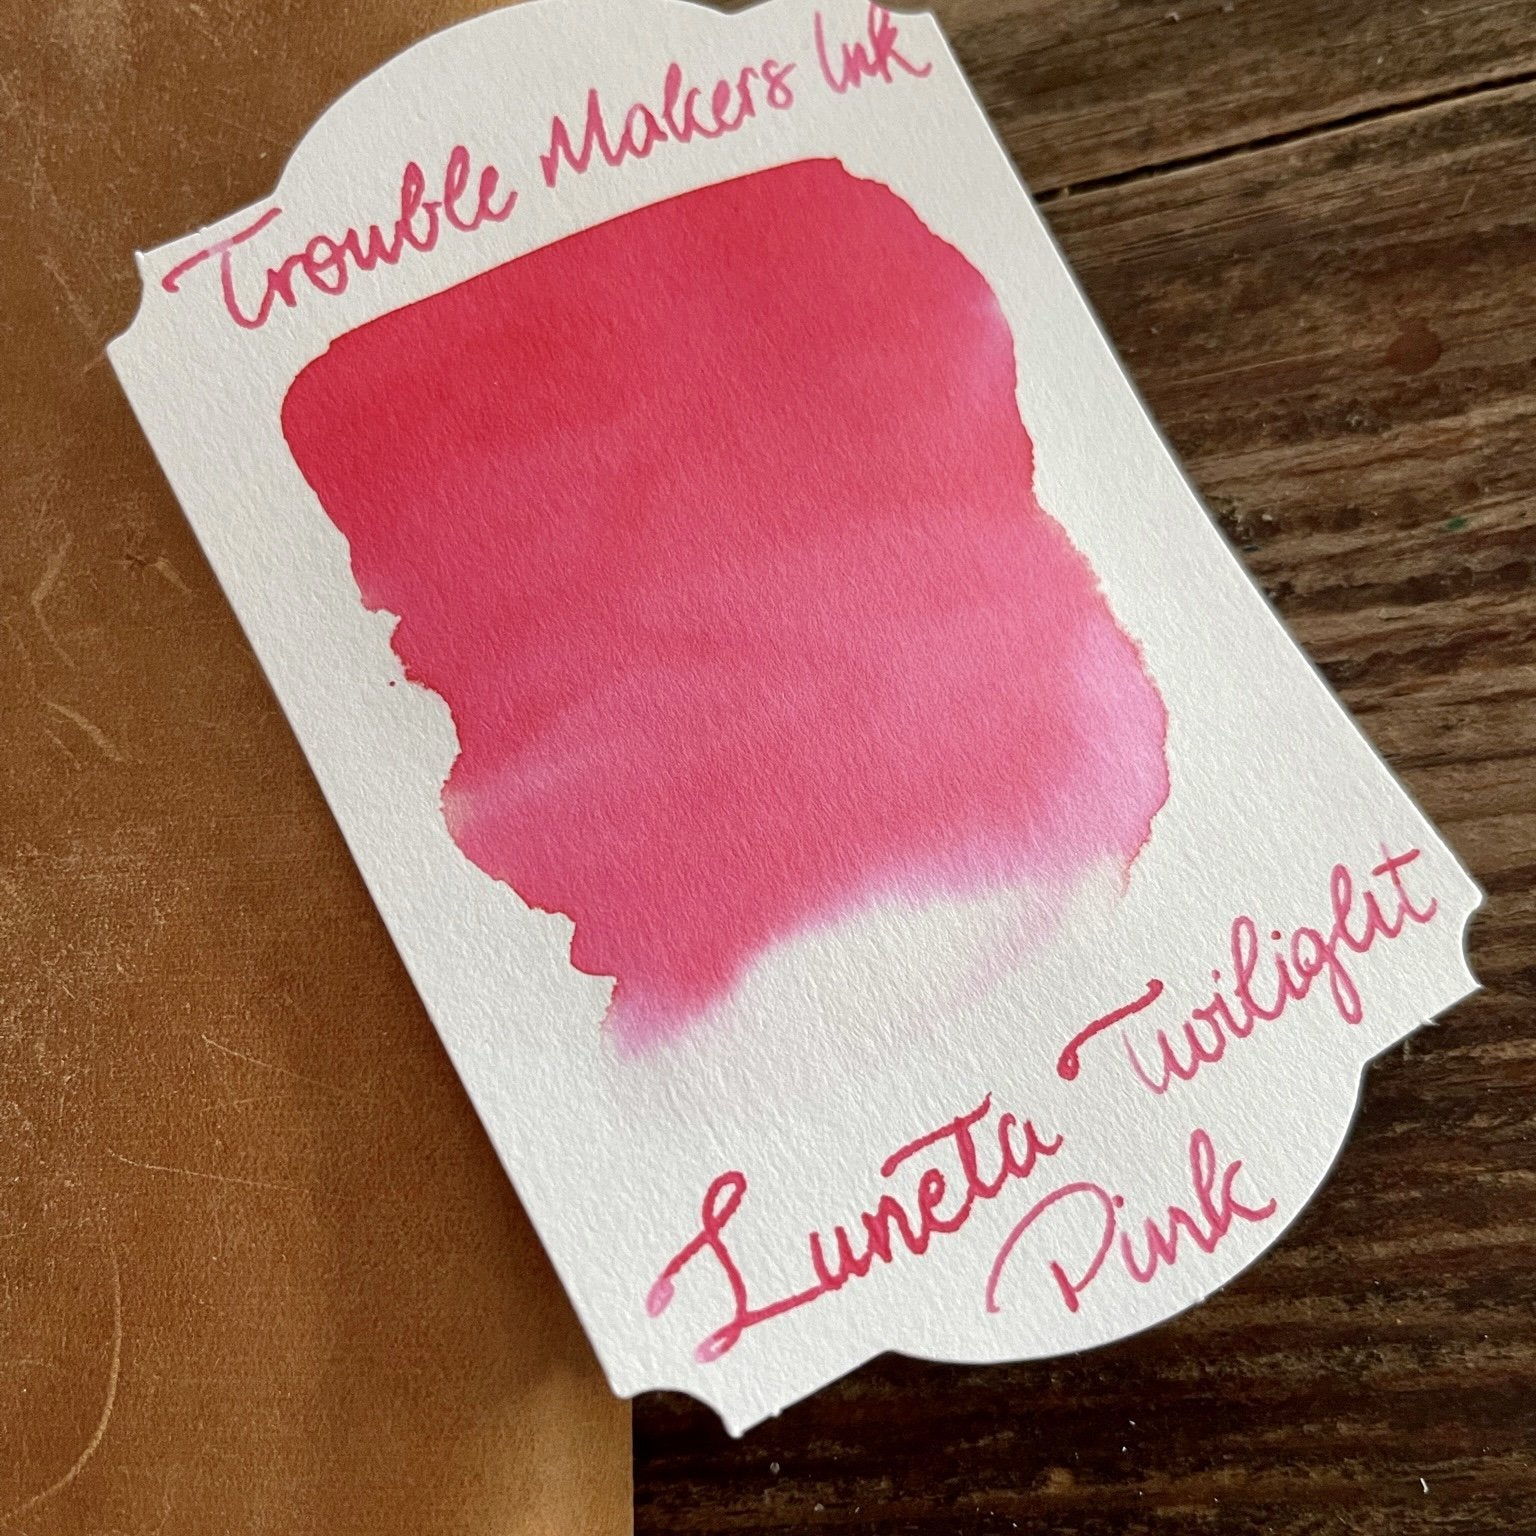 Troublemaker Luneta Twilight Pink Mürekkep 60 ml